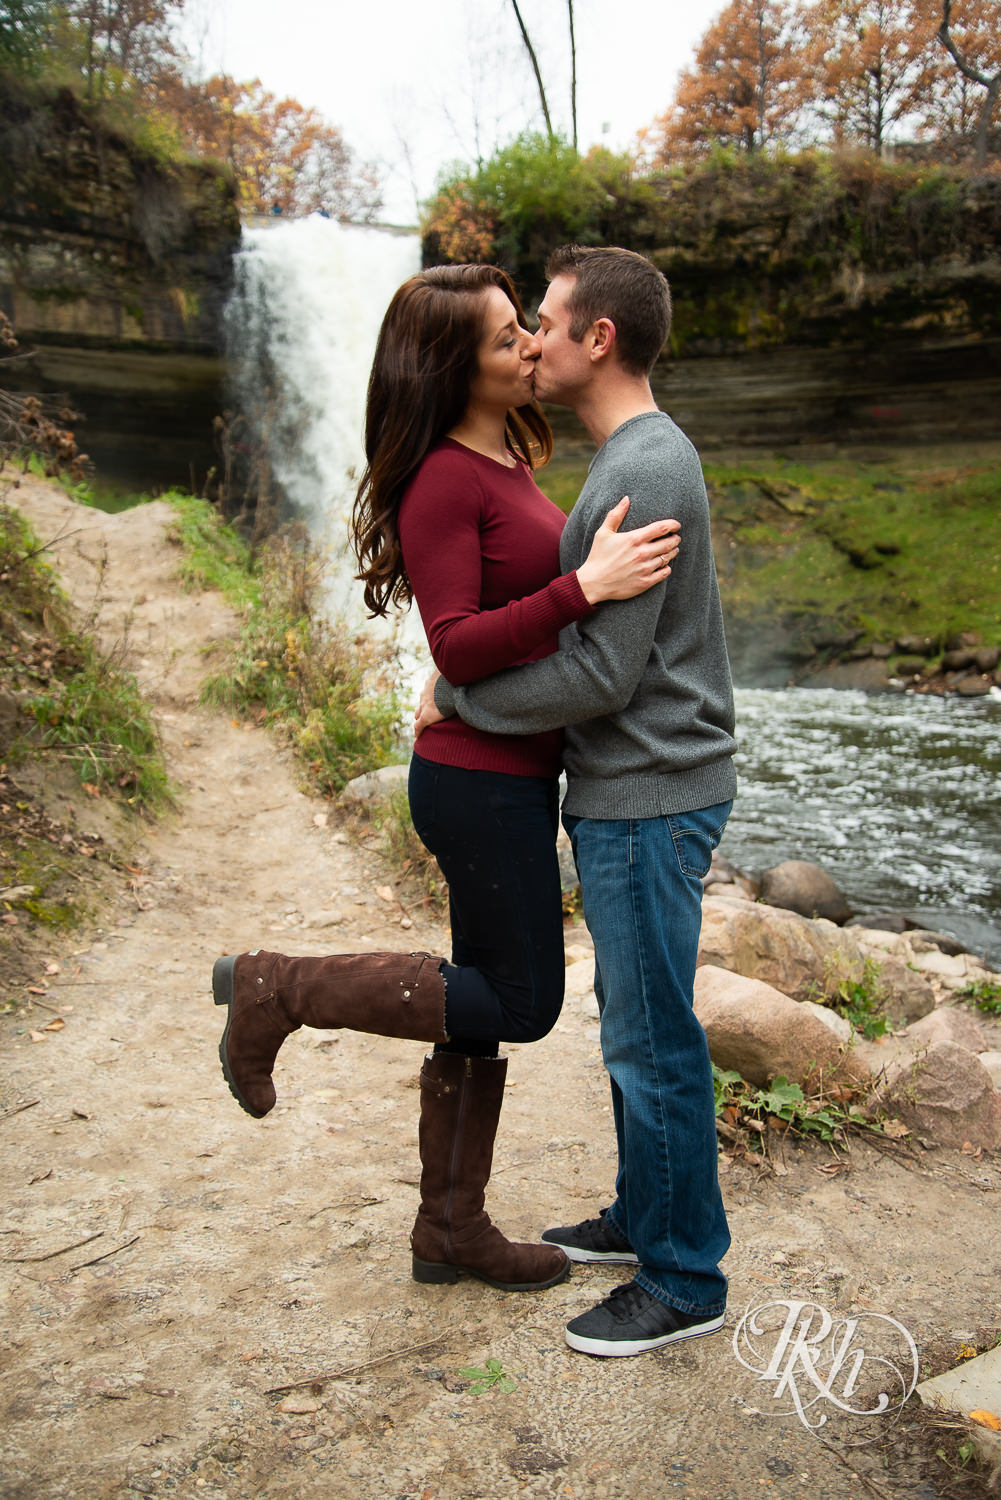 Man and woman kiss in front of Minnehaha Falls in Minneapolis, Minnesota.